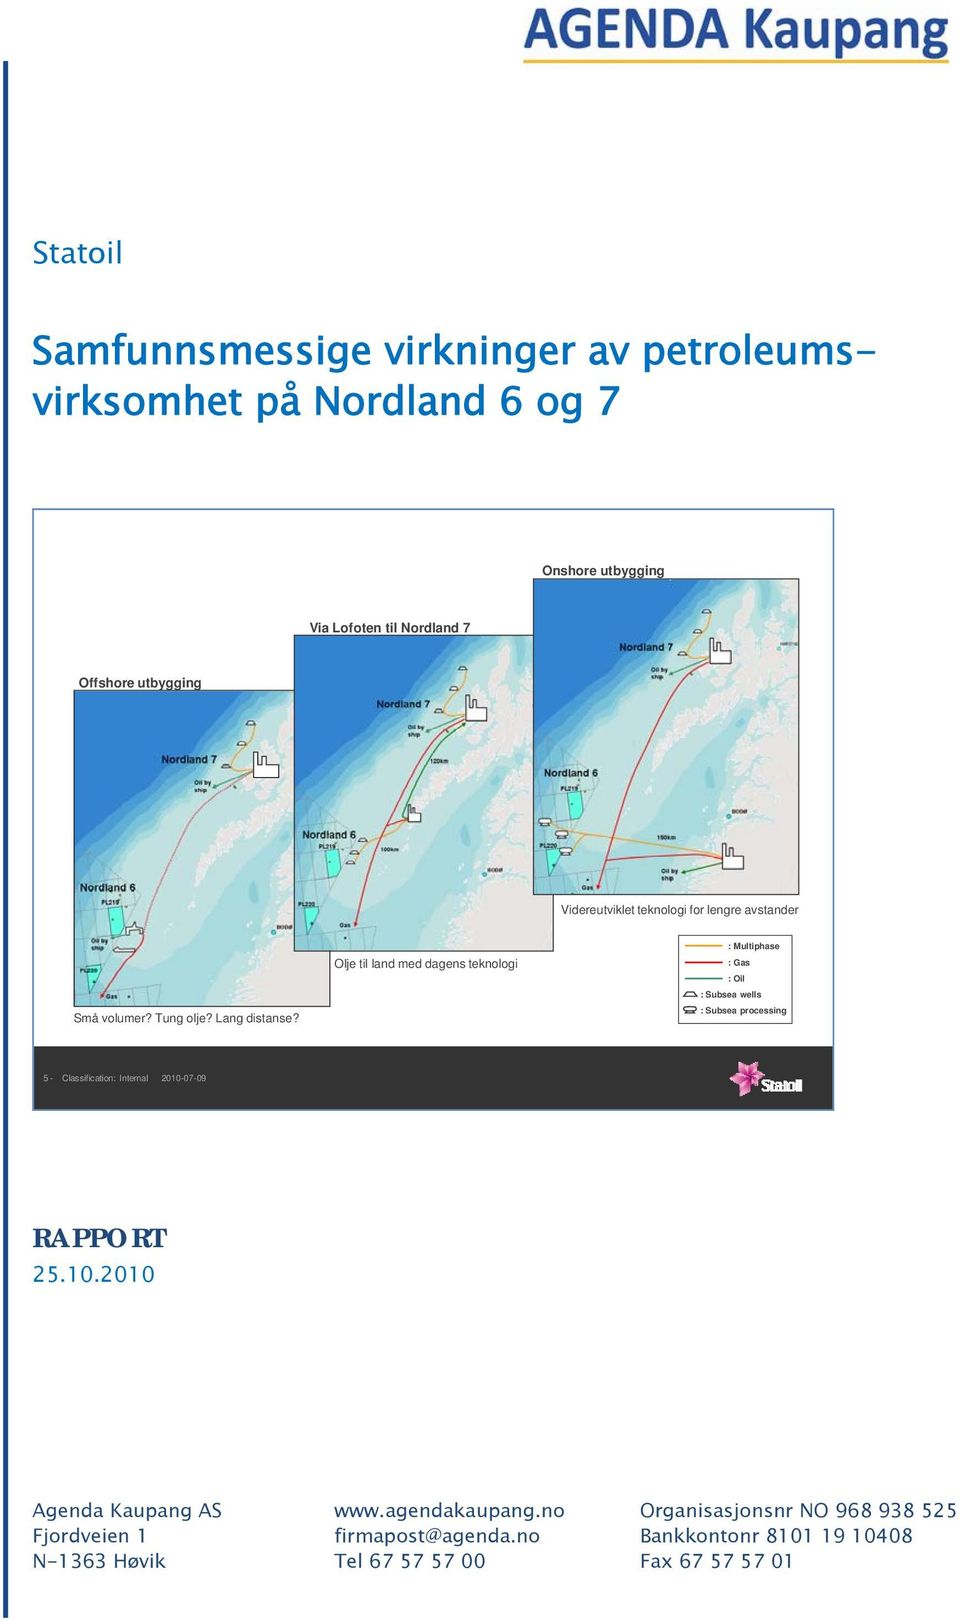 Olje til land med dagens teknologi : Multiphase : Gas : Oil : Subsea wells : Subsea processing 5 - Classification: Internal 2010-07-09